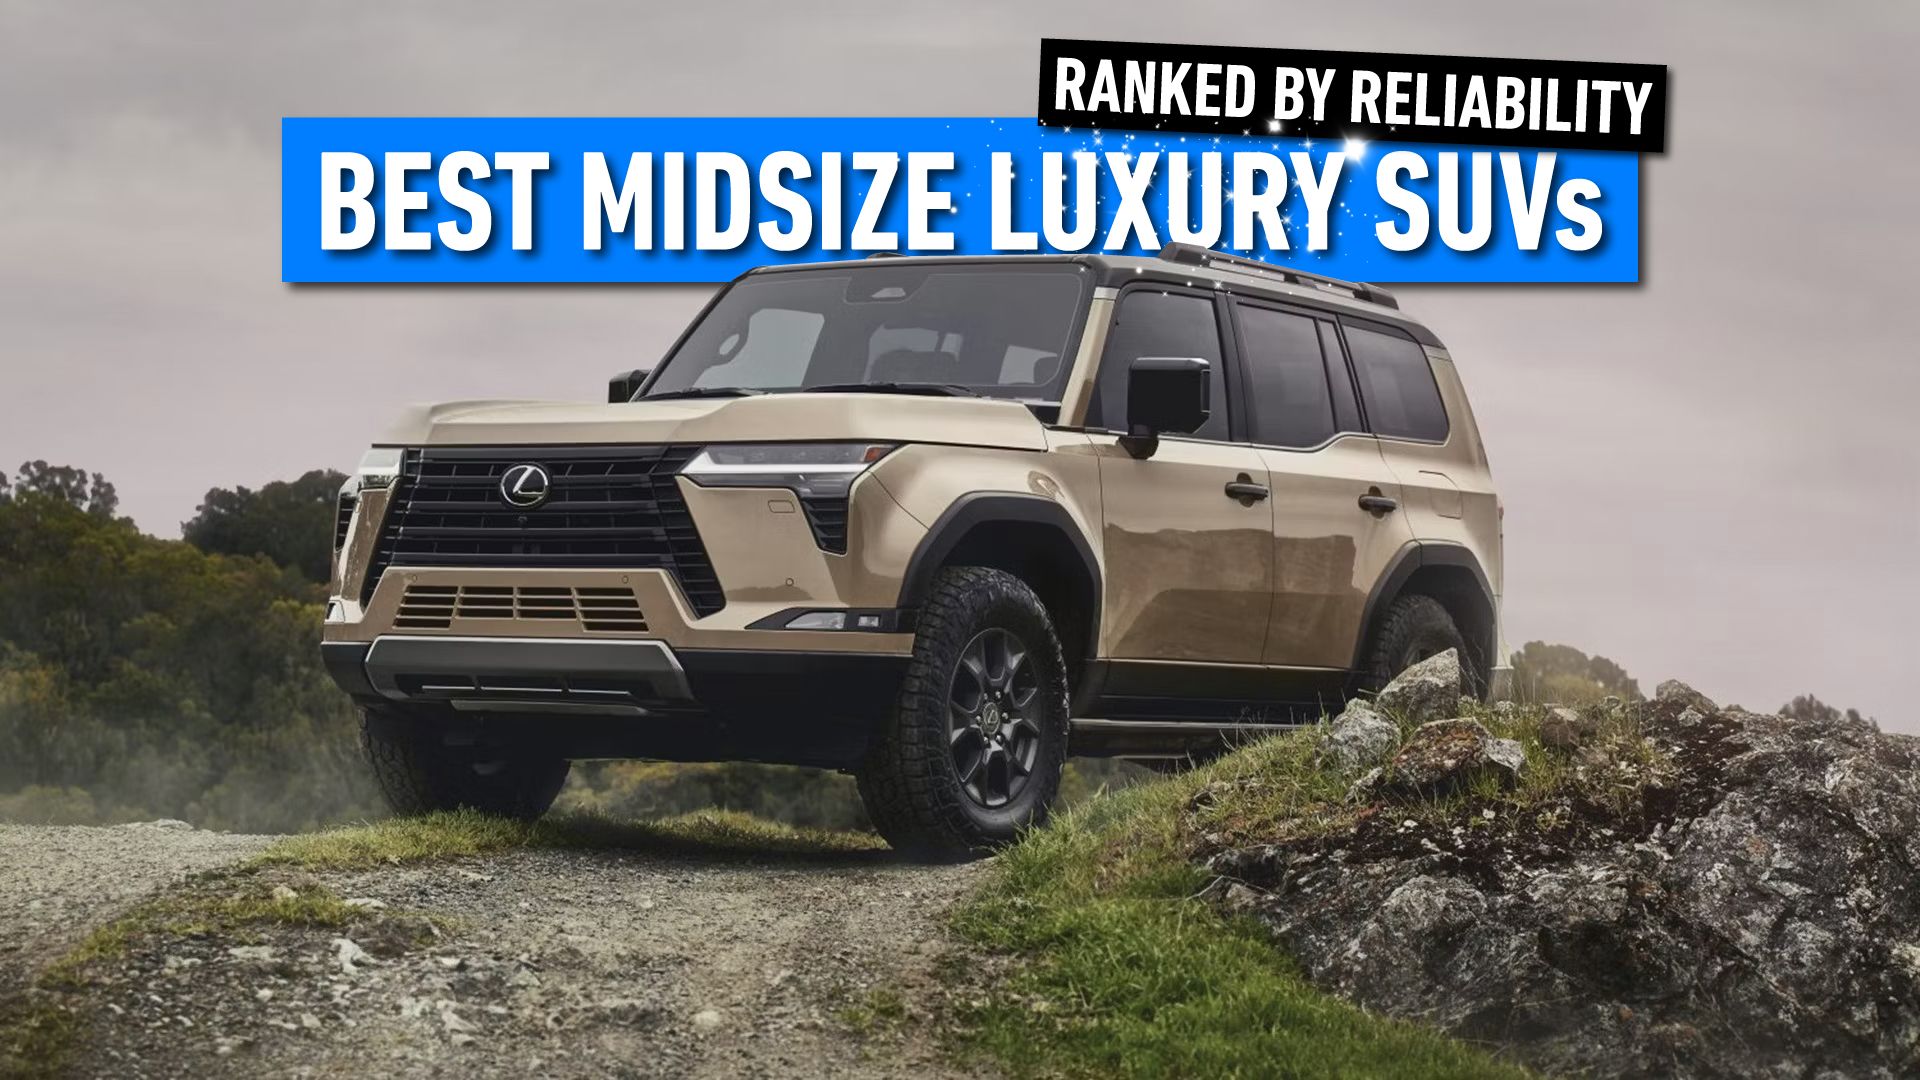 Best-Midsize-Luxury-SUVs-Ranked-By-Reliability